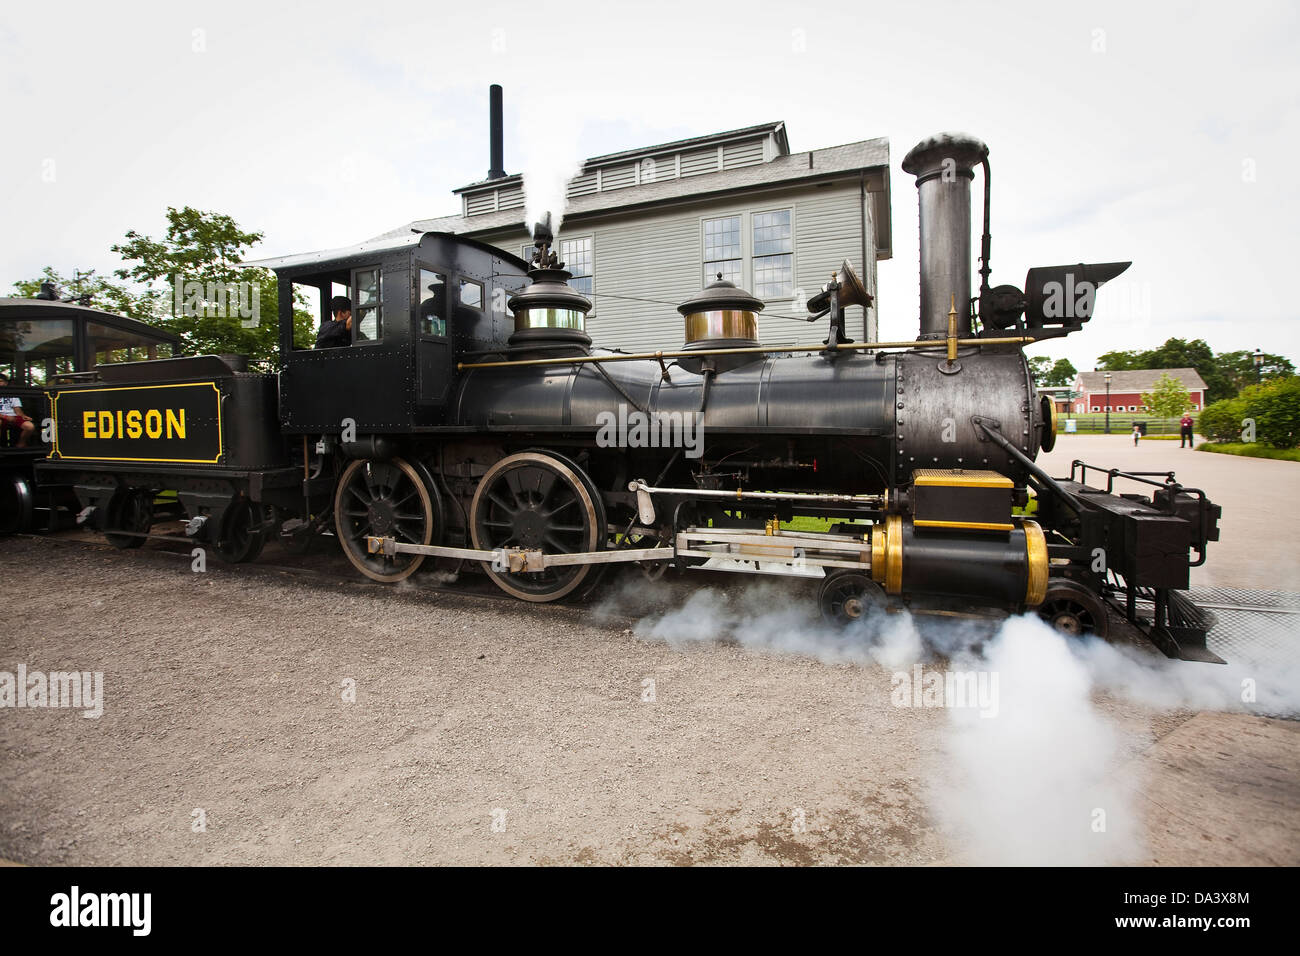 The 1932 Edison steam locomotive is seen in Dearborn' Greenfield Village in Dearborn, near Detroit (Mi) Stock Photo